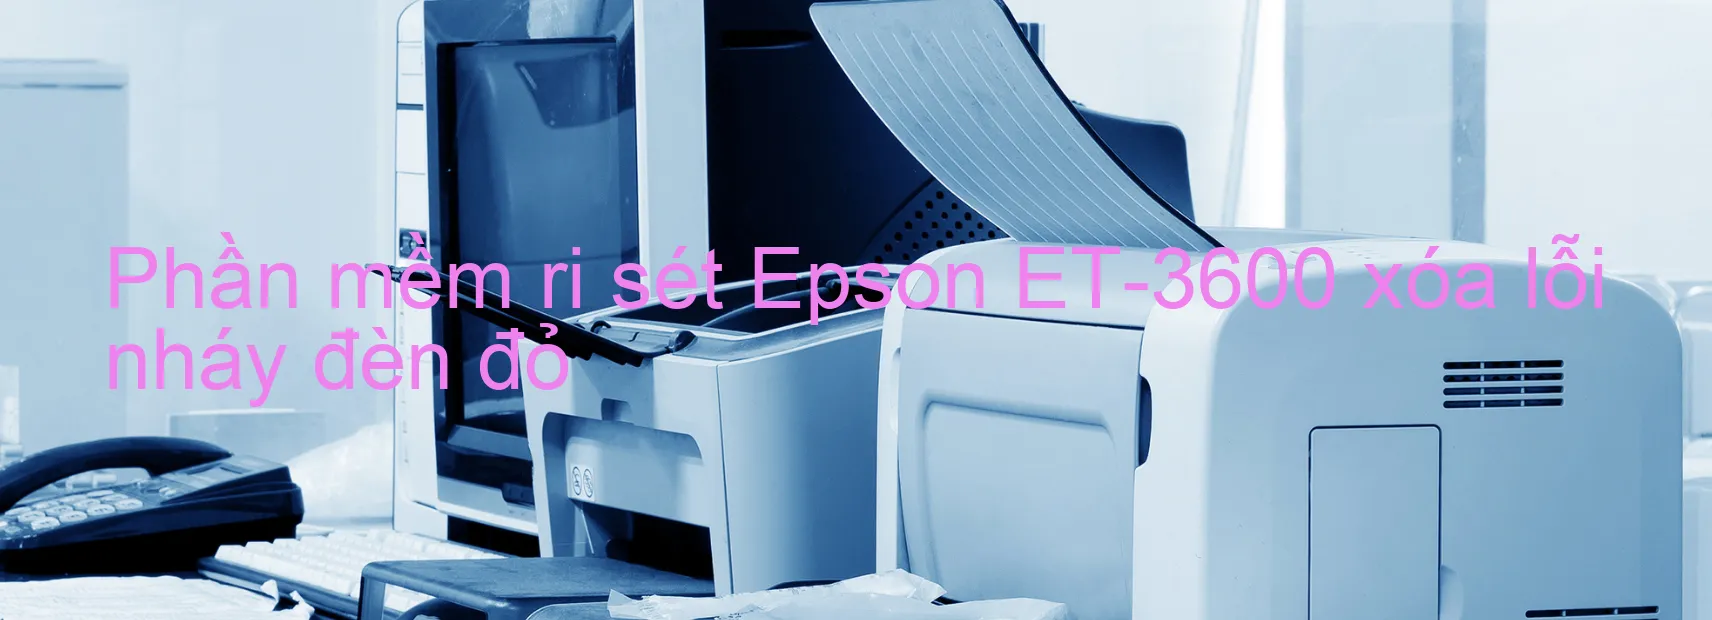 Phần mềm reset Epson ET-3600 xóa lỗi nháy đèn đỏ